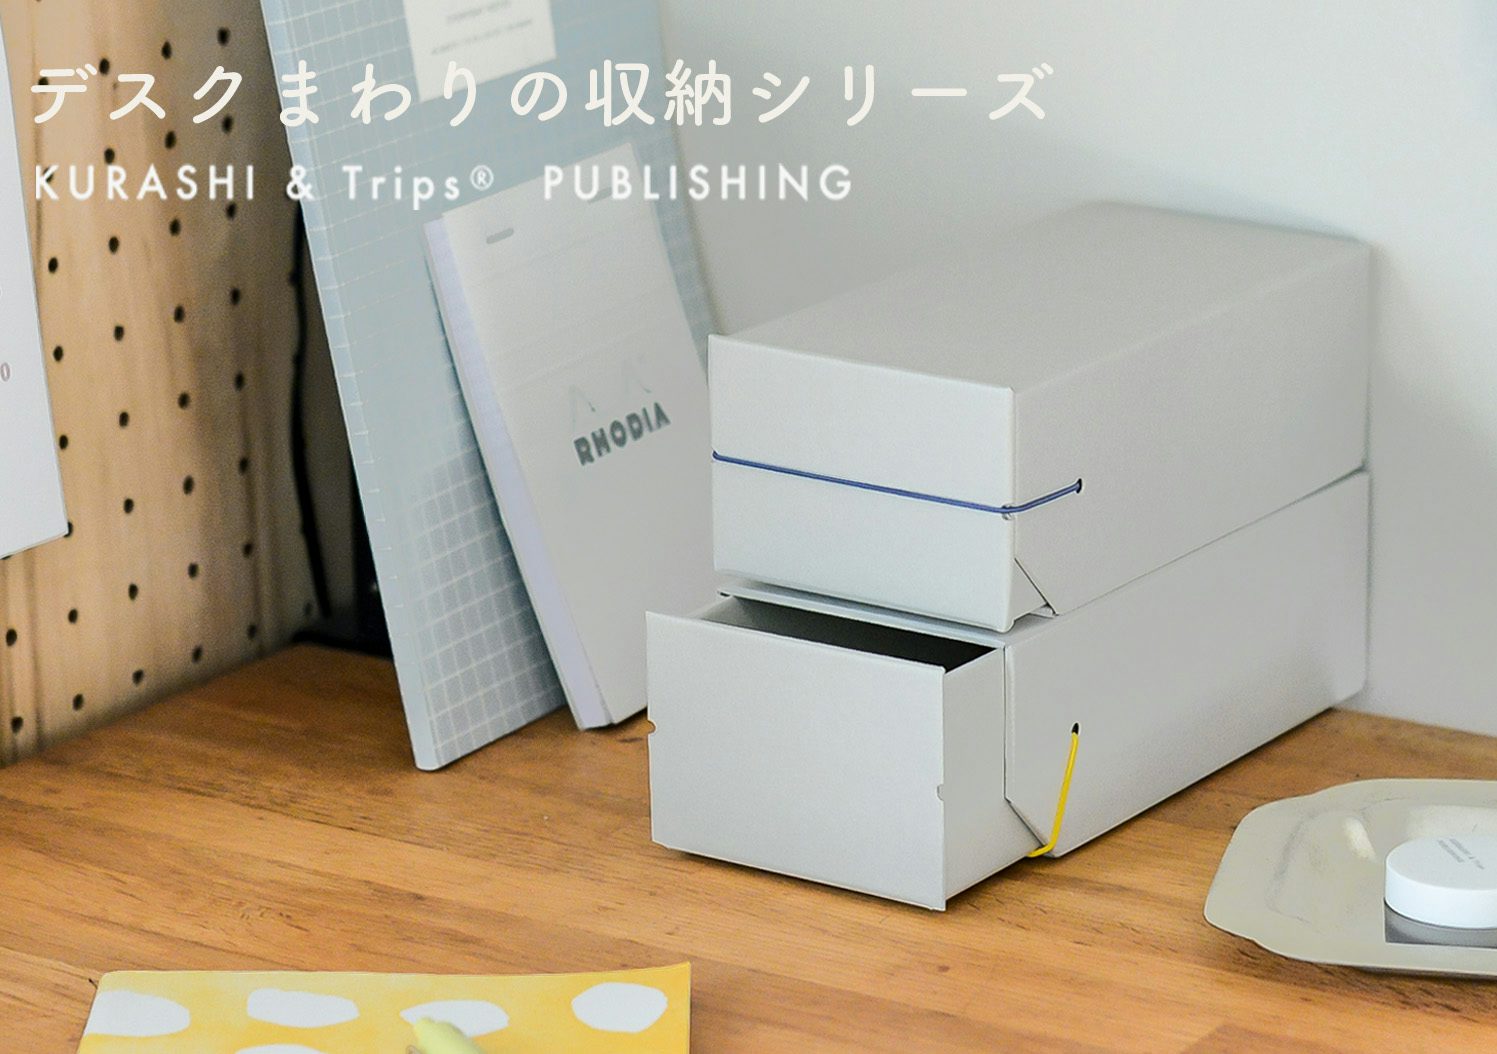 KURASHI&Trips PUBLISHING / デスク周りの収納シリーズの画像